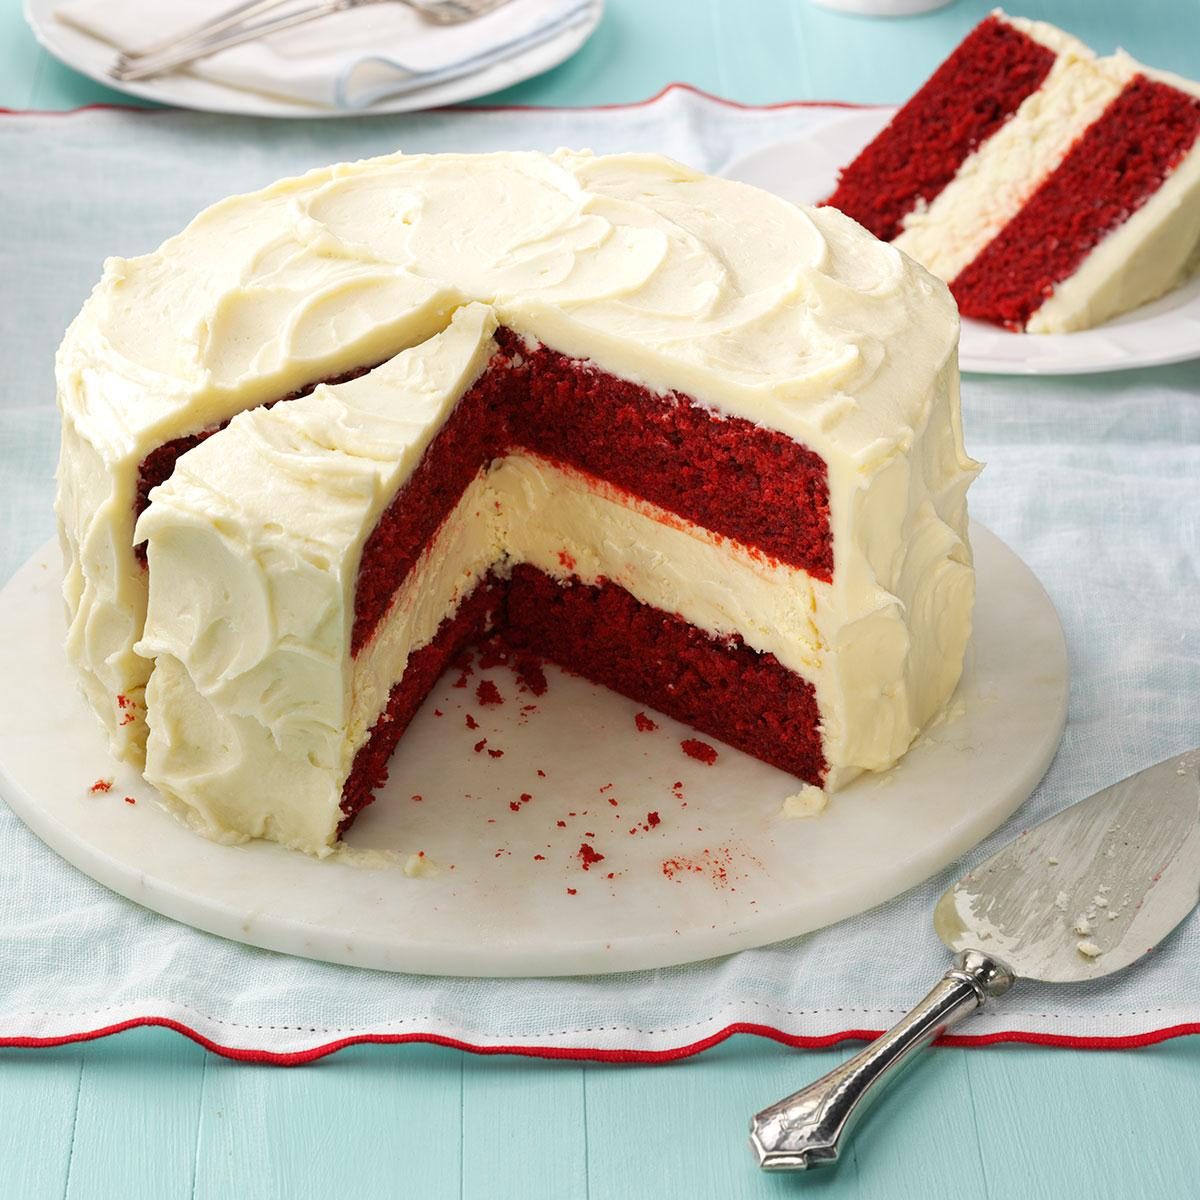 Cheesecake Layered Red Velvet Cake Recipe: How to Make It